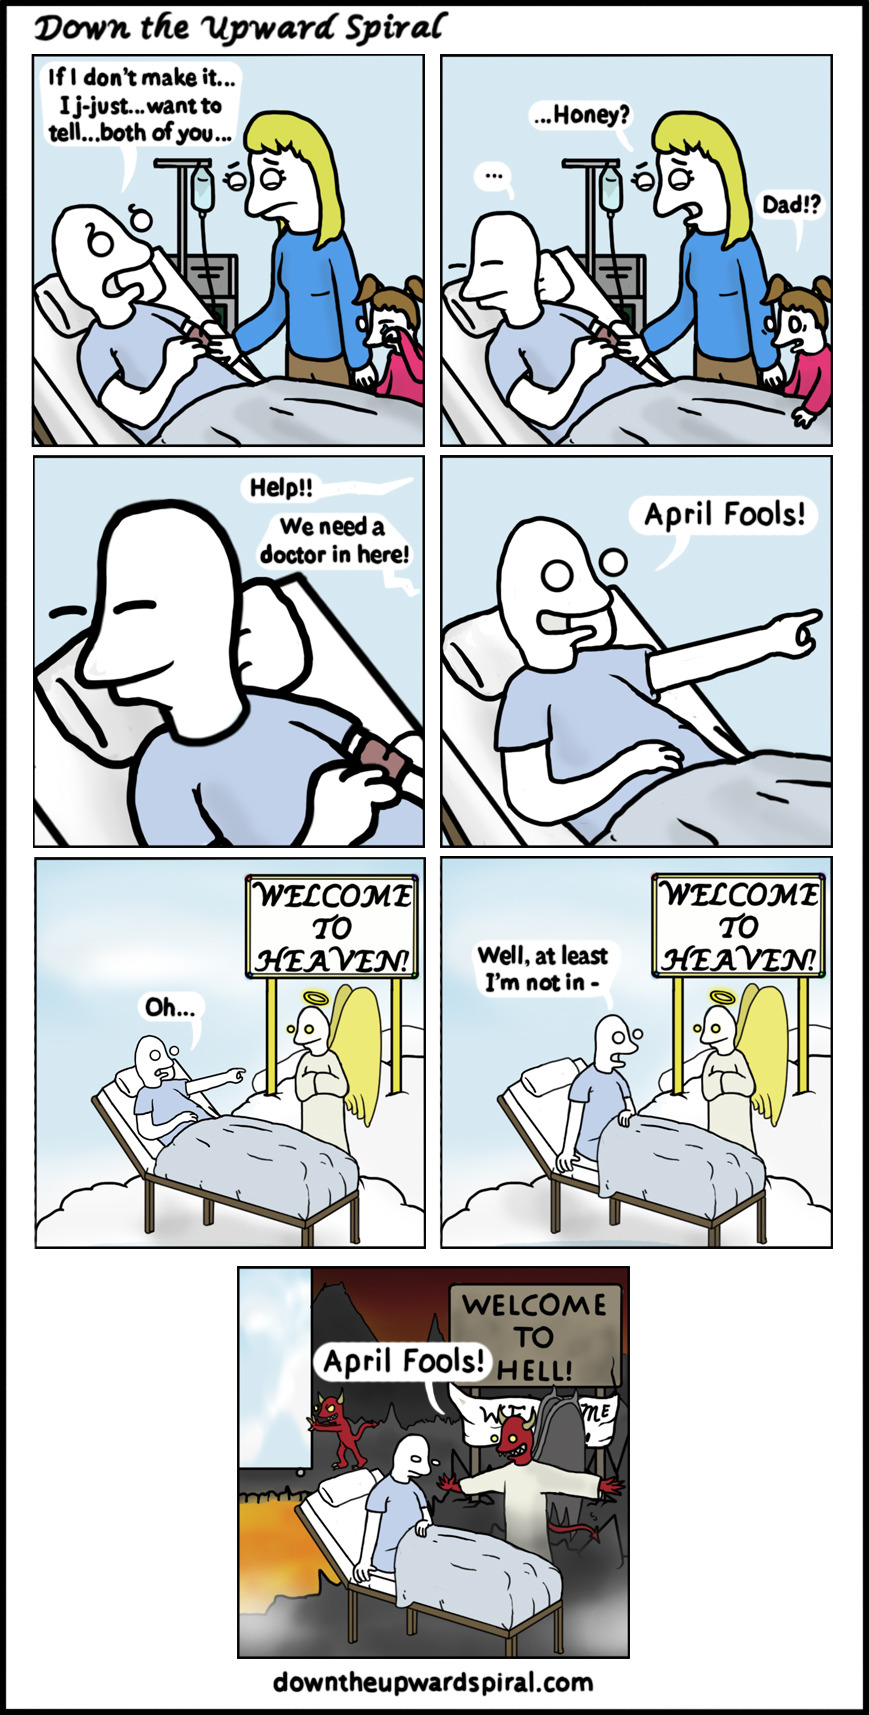 April fools prank